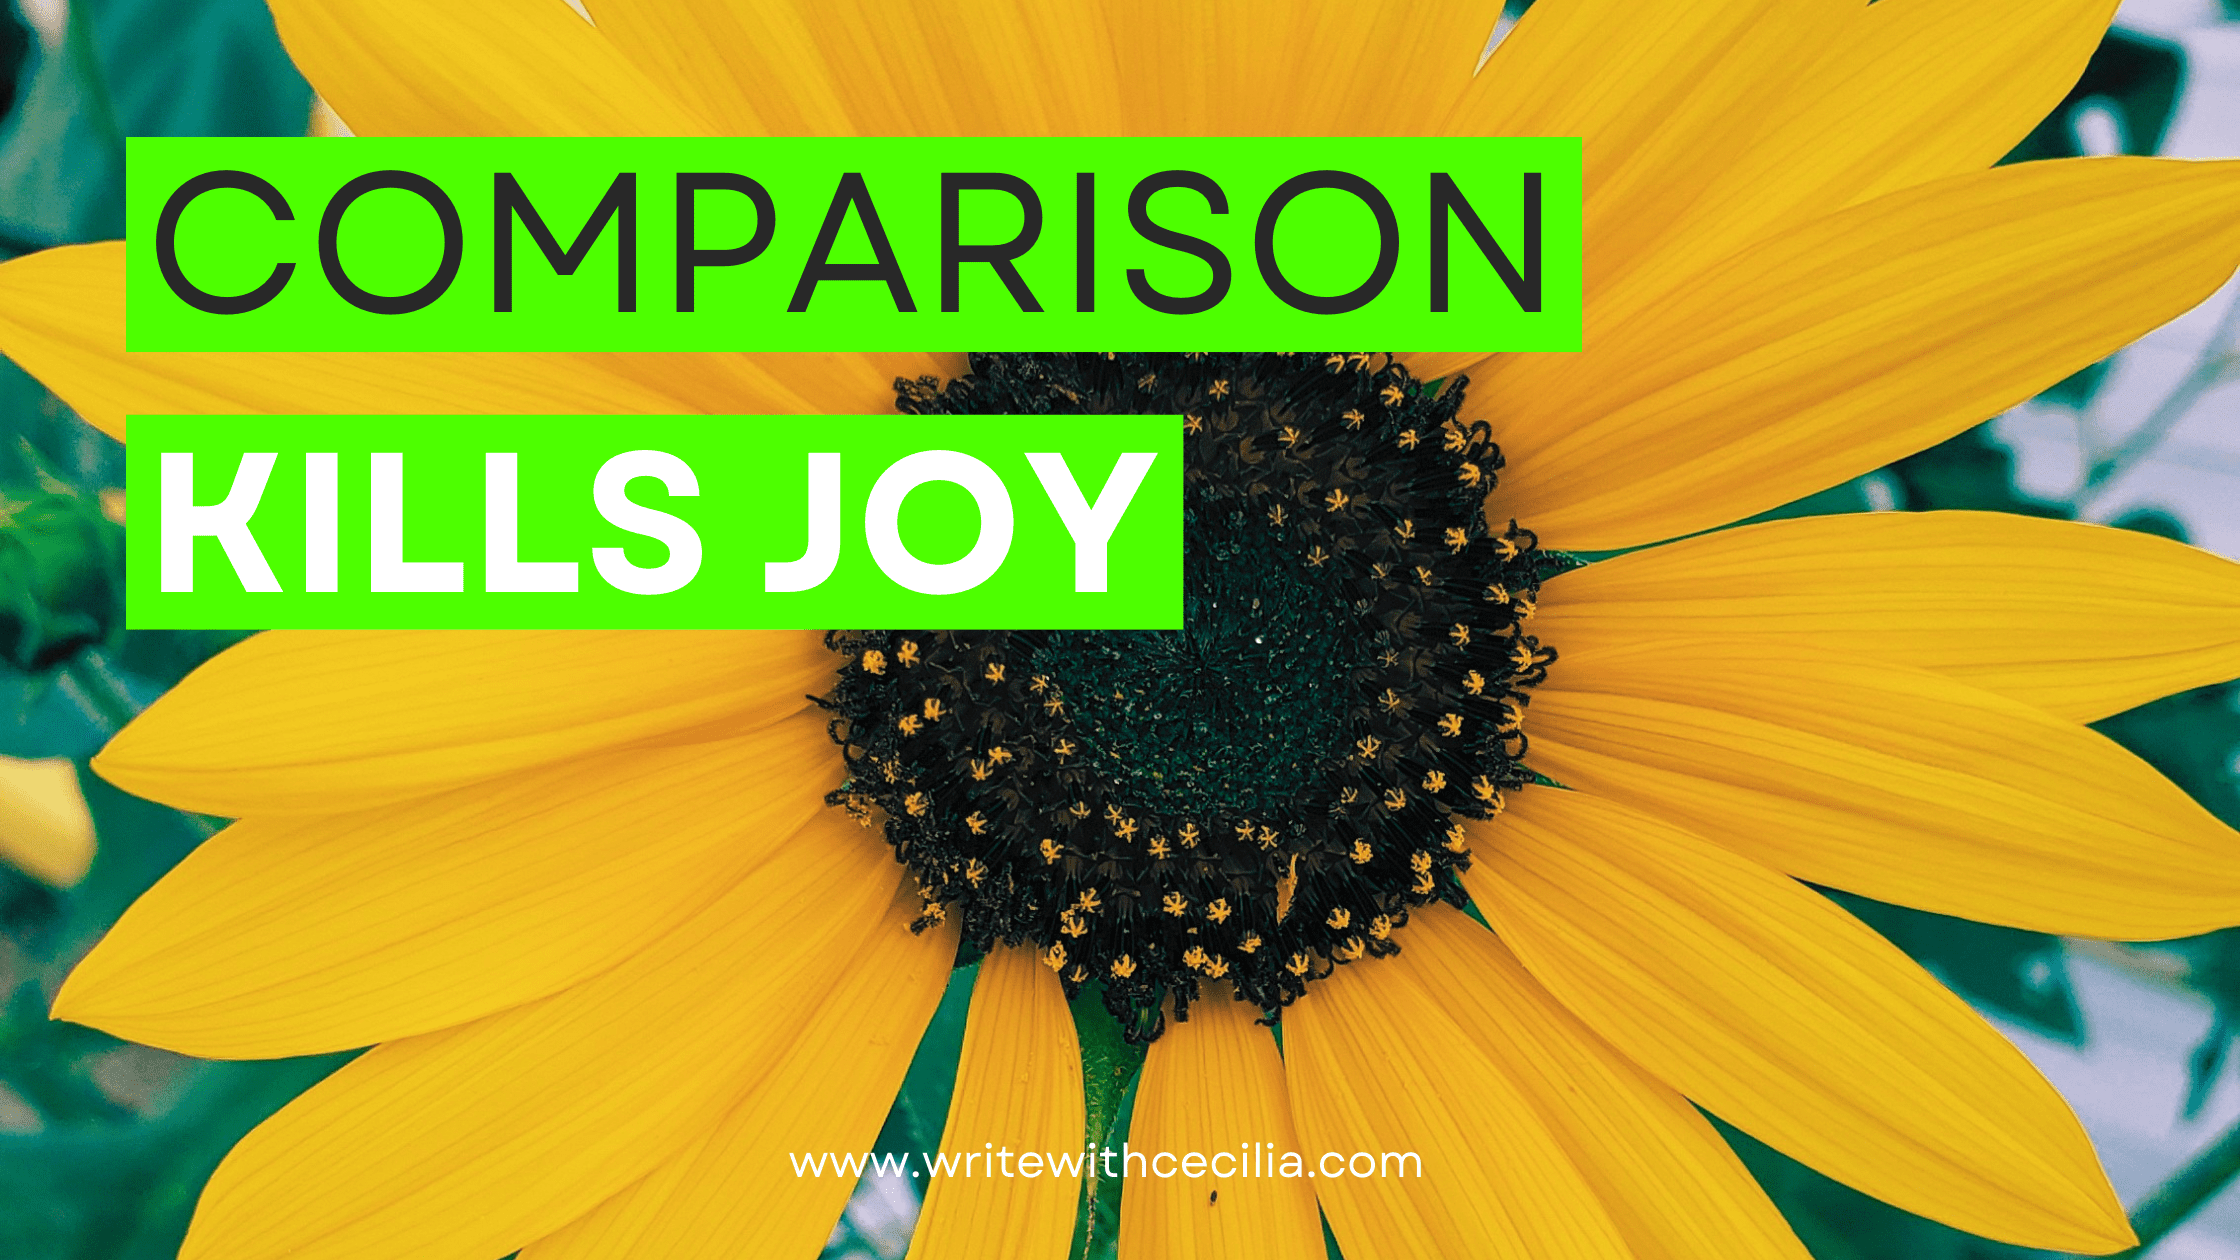 Comparison kills joy